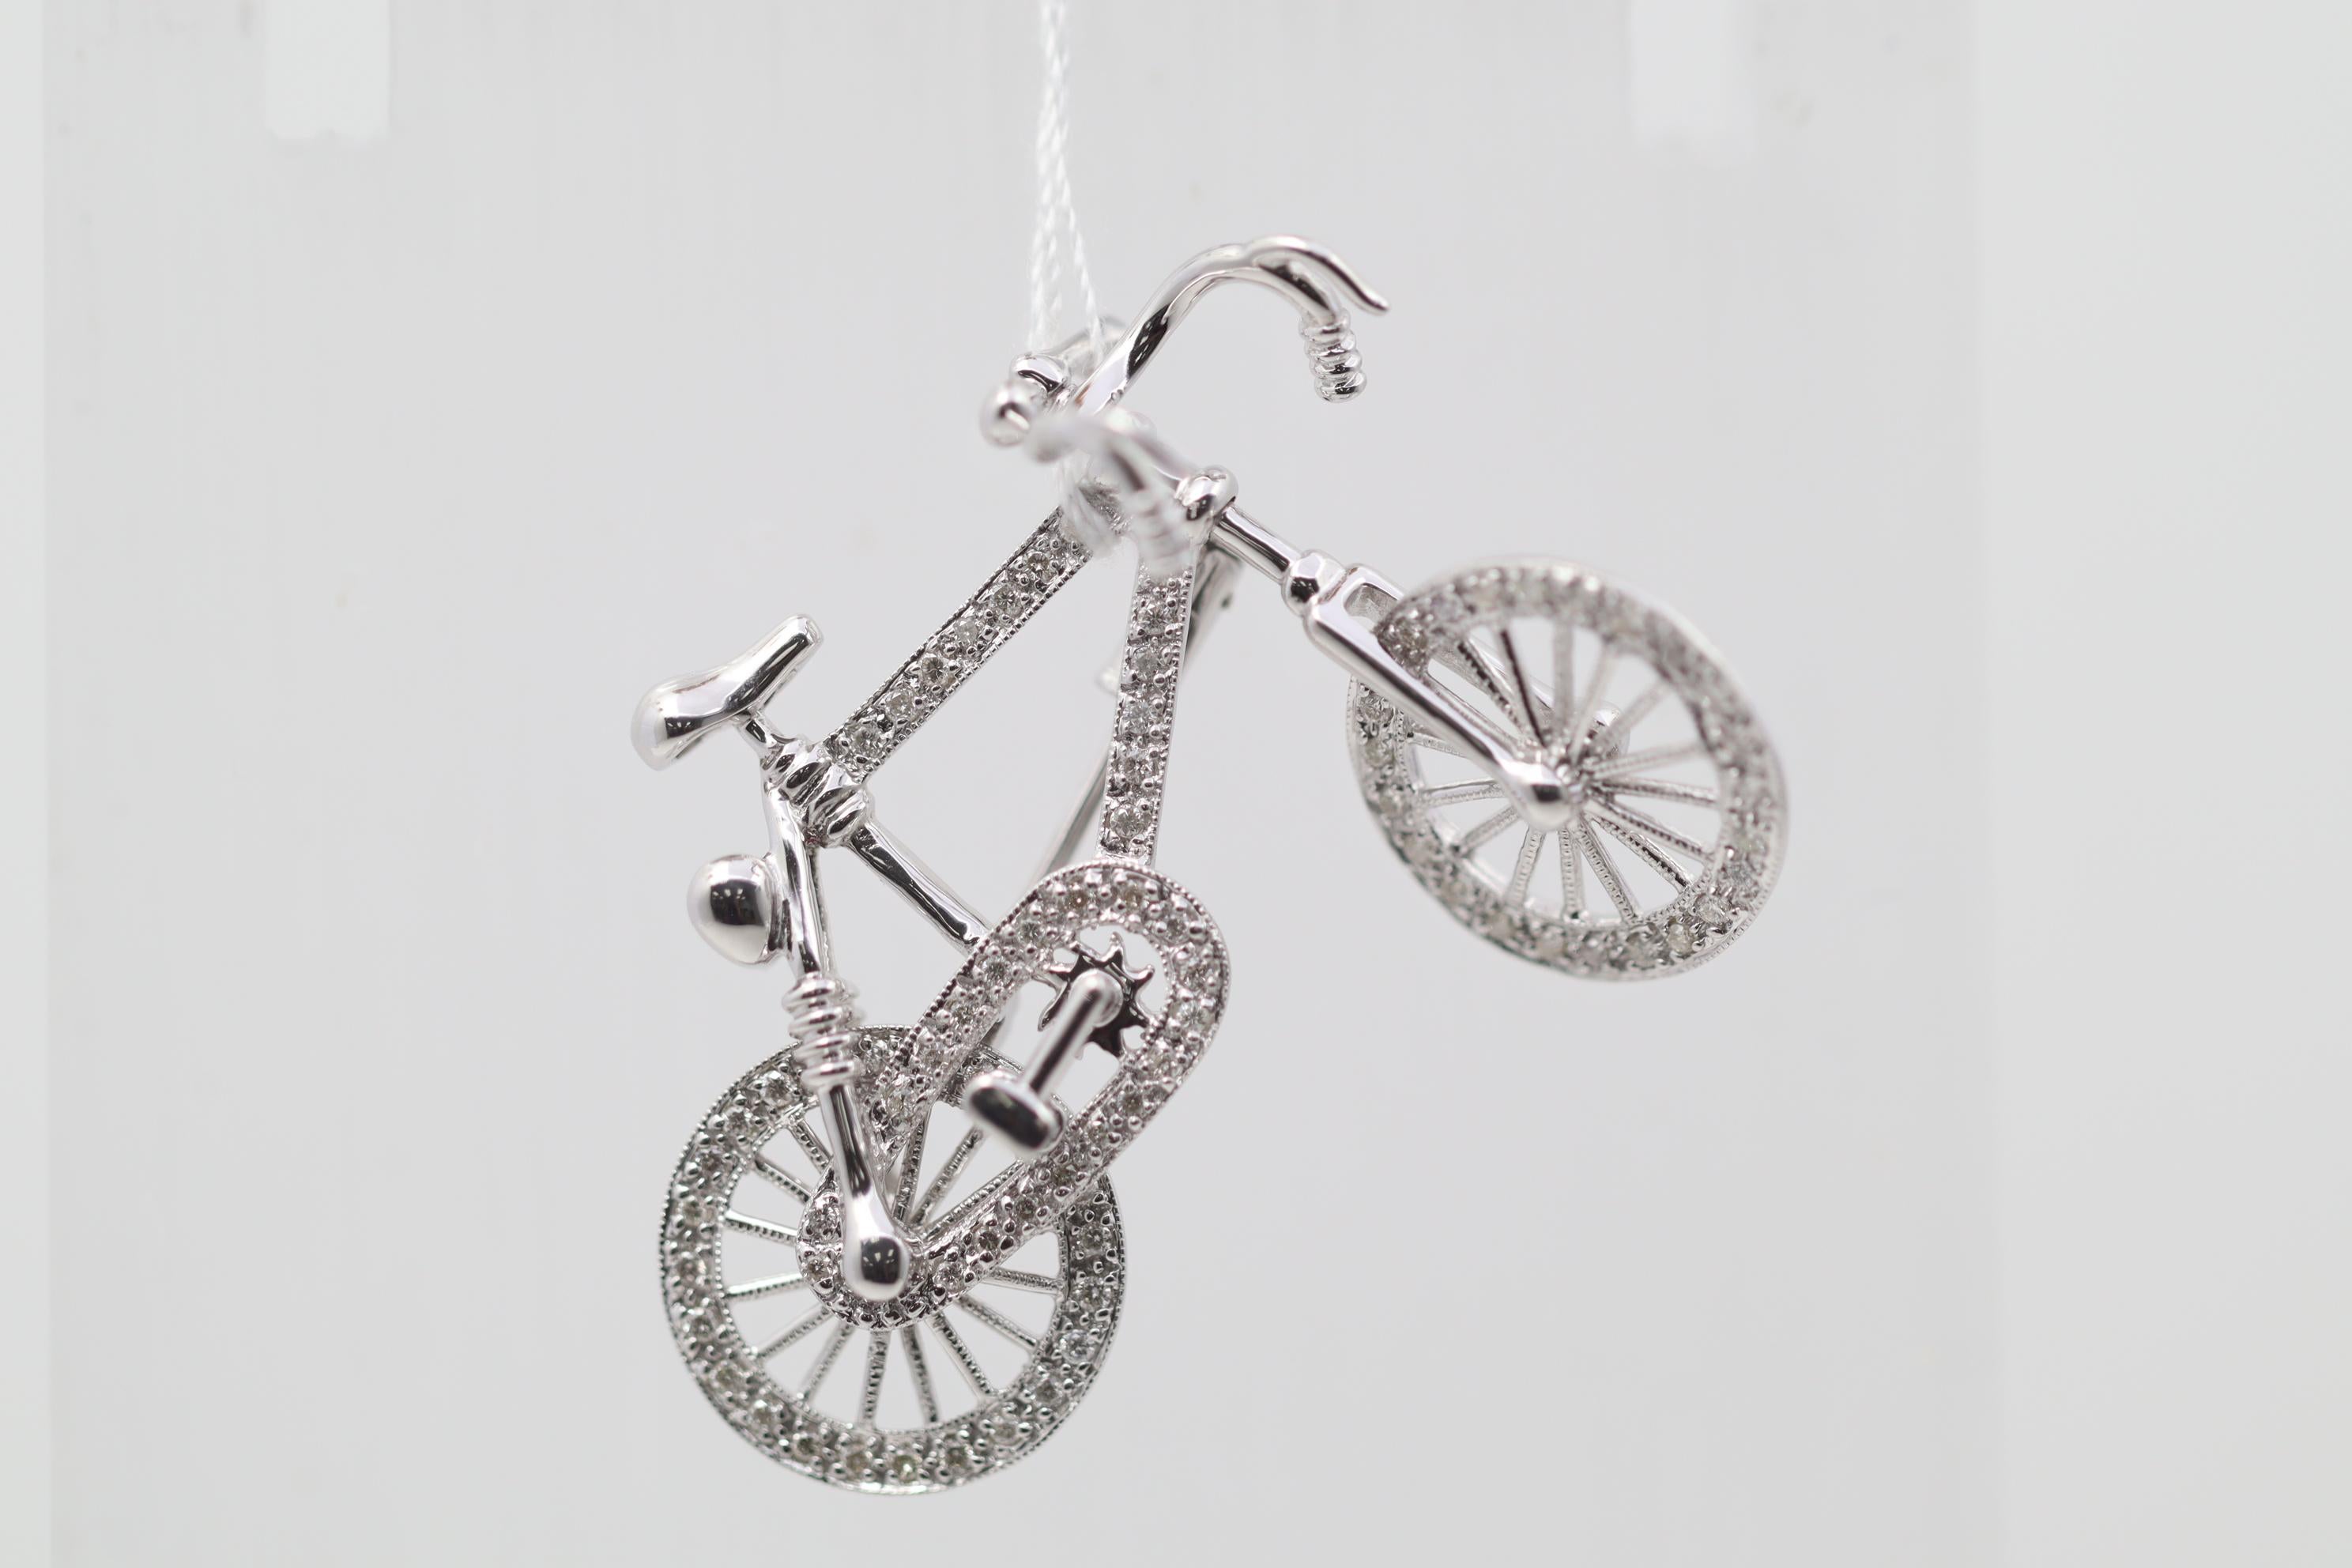 bicycle brooch